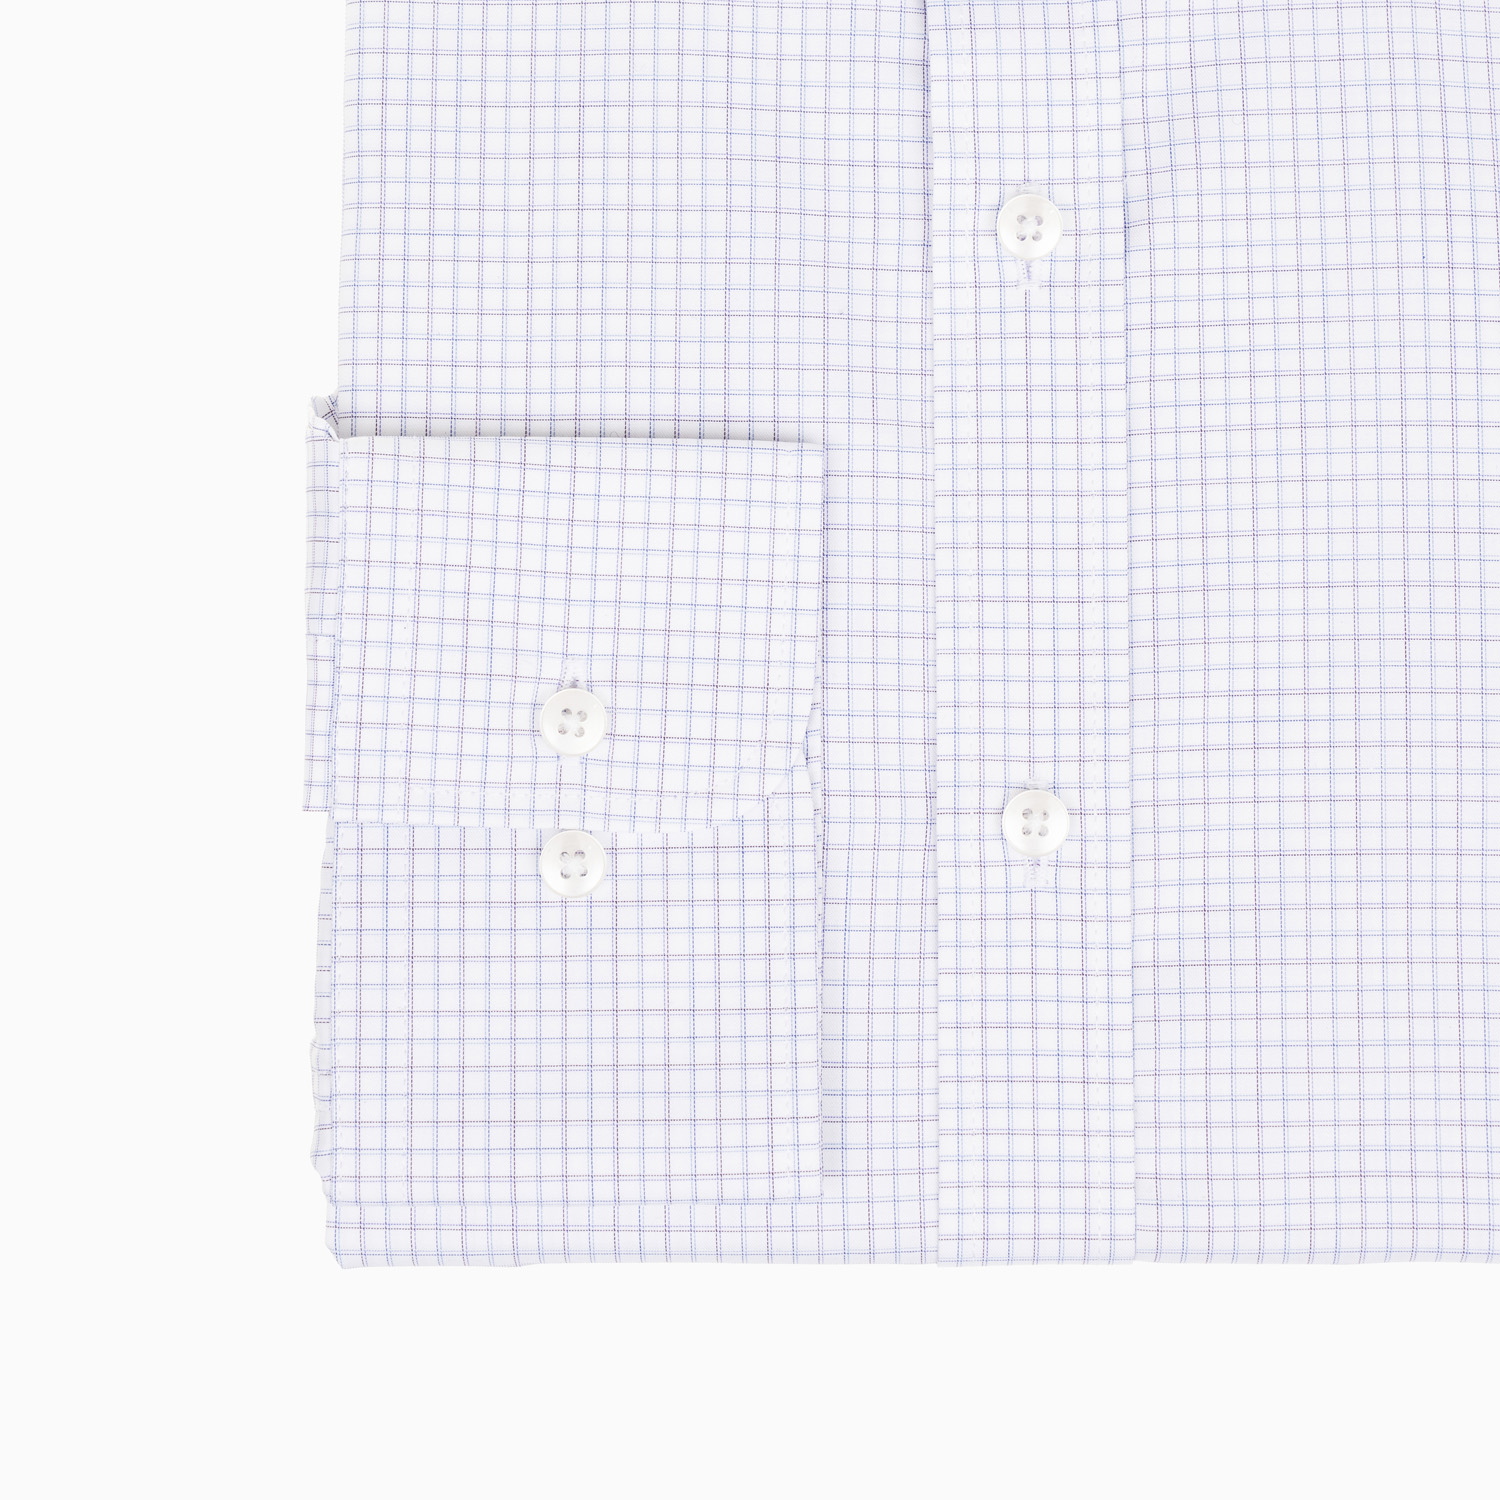 Business Hemd Weiß mit Jacquard-Muster  - Slim Fit